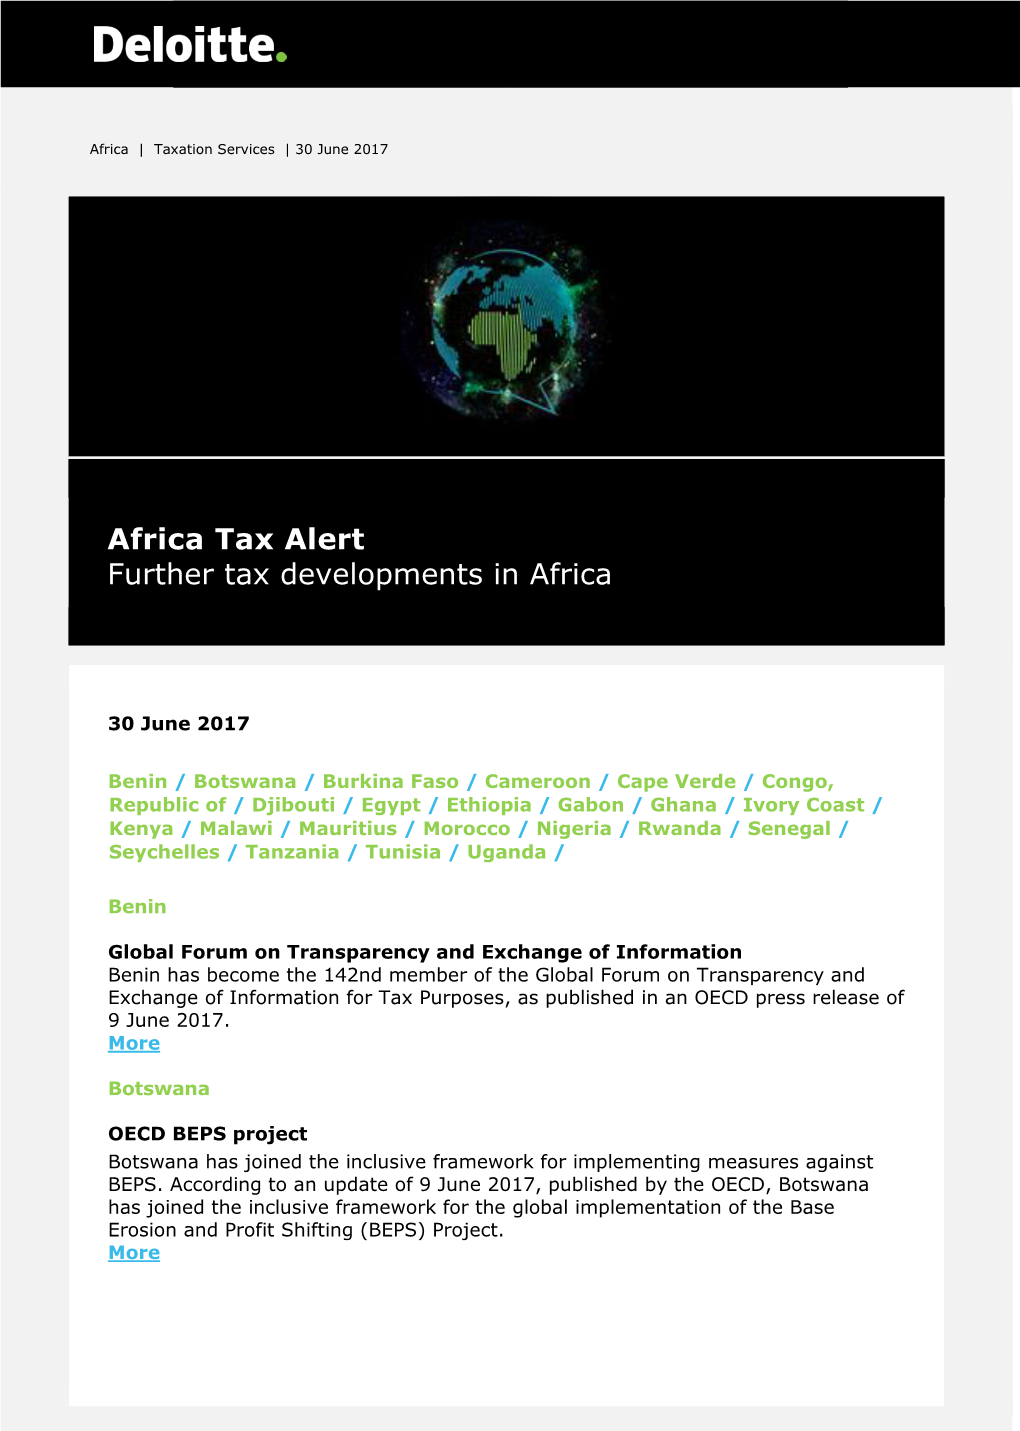 Africa Tax Alert Further Tax Developments in Africa